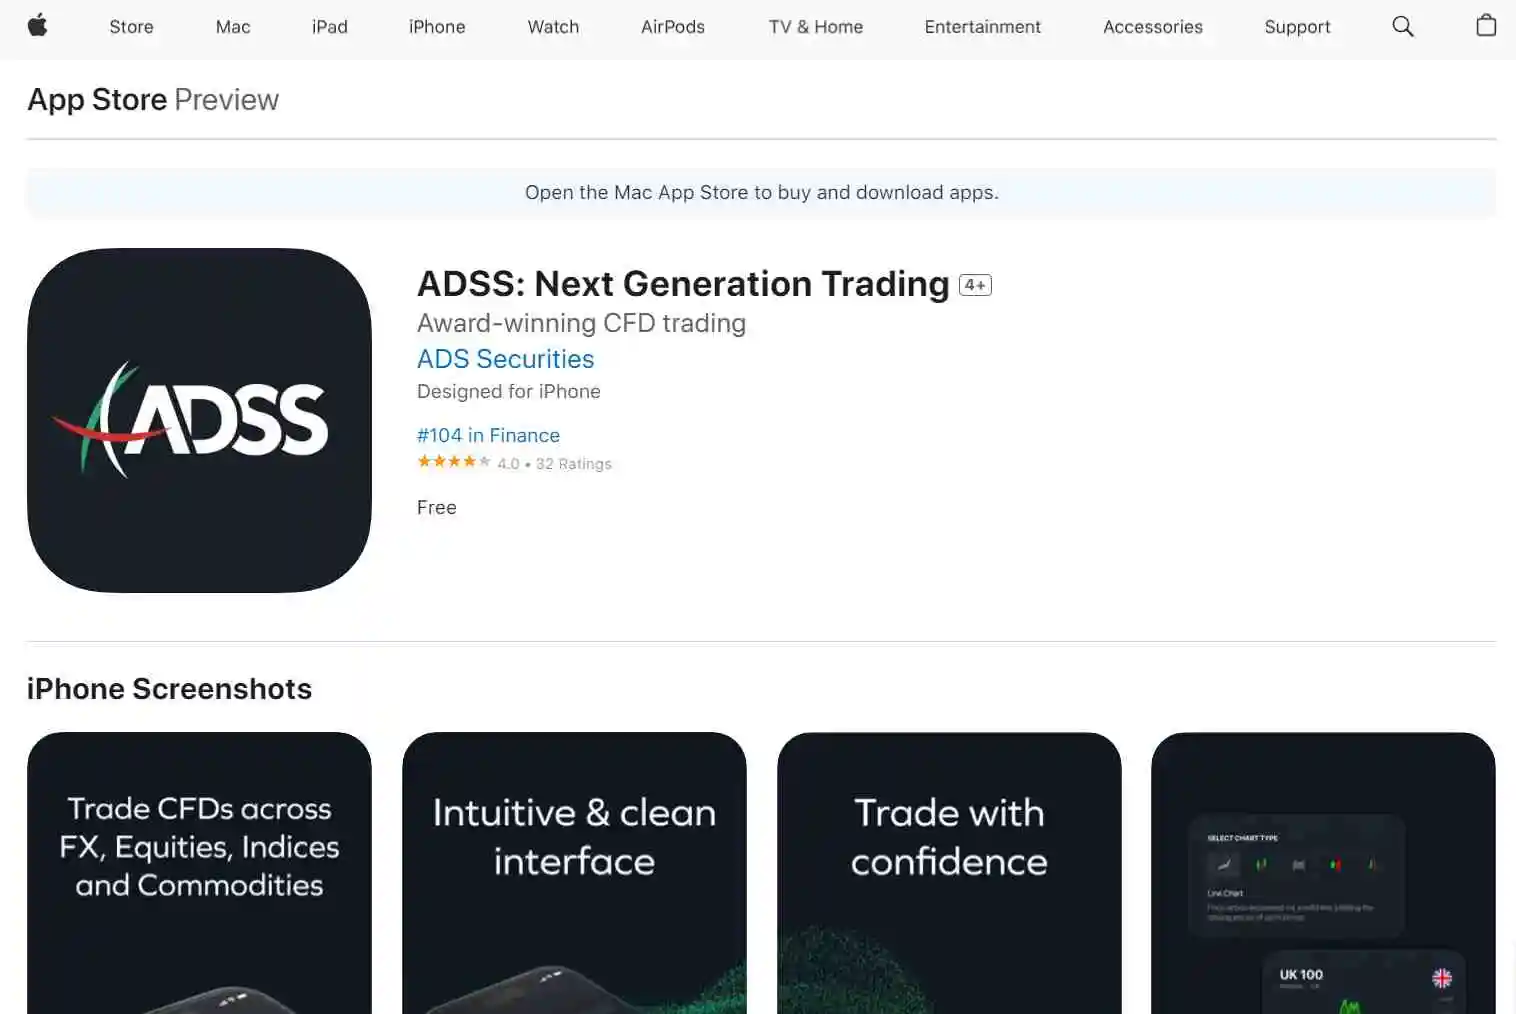 A deep dive into ADSS Mobile App